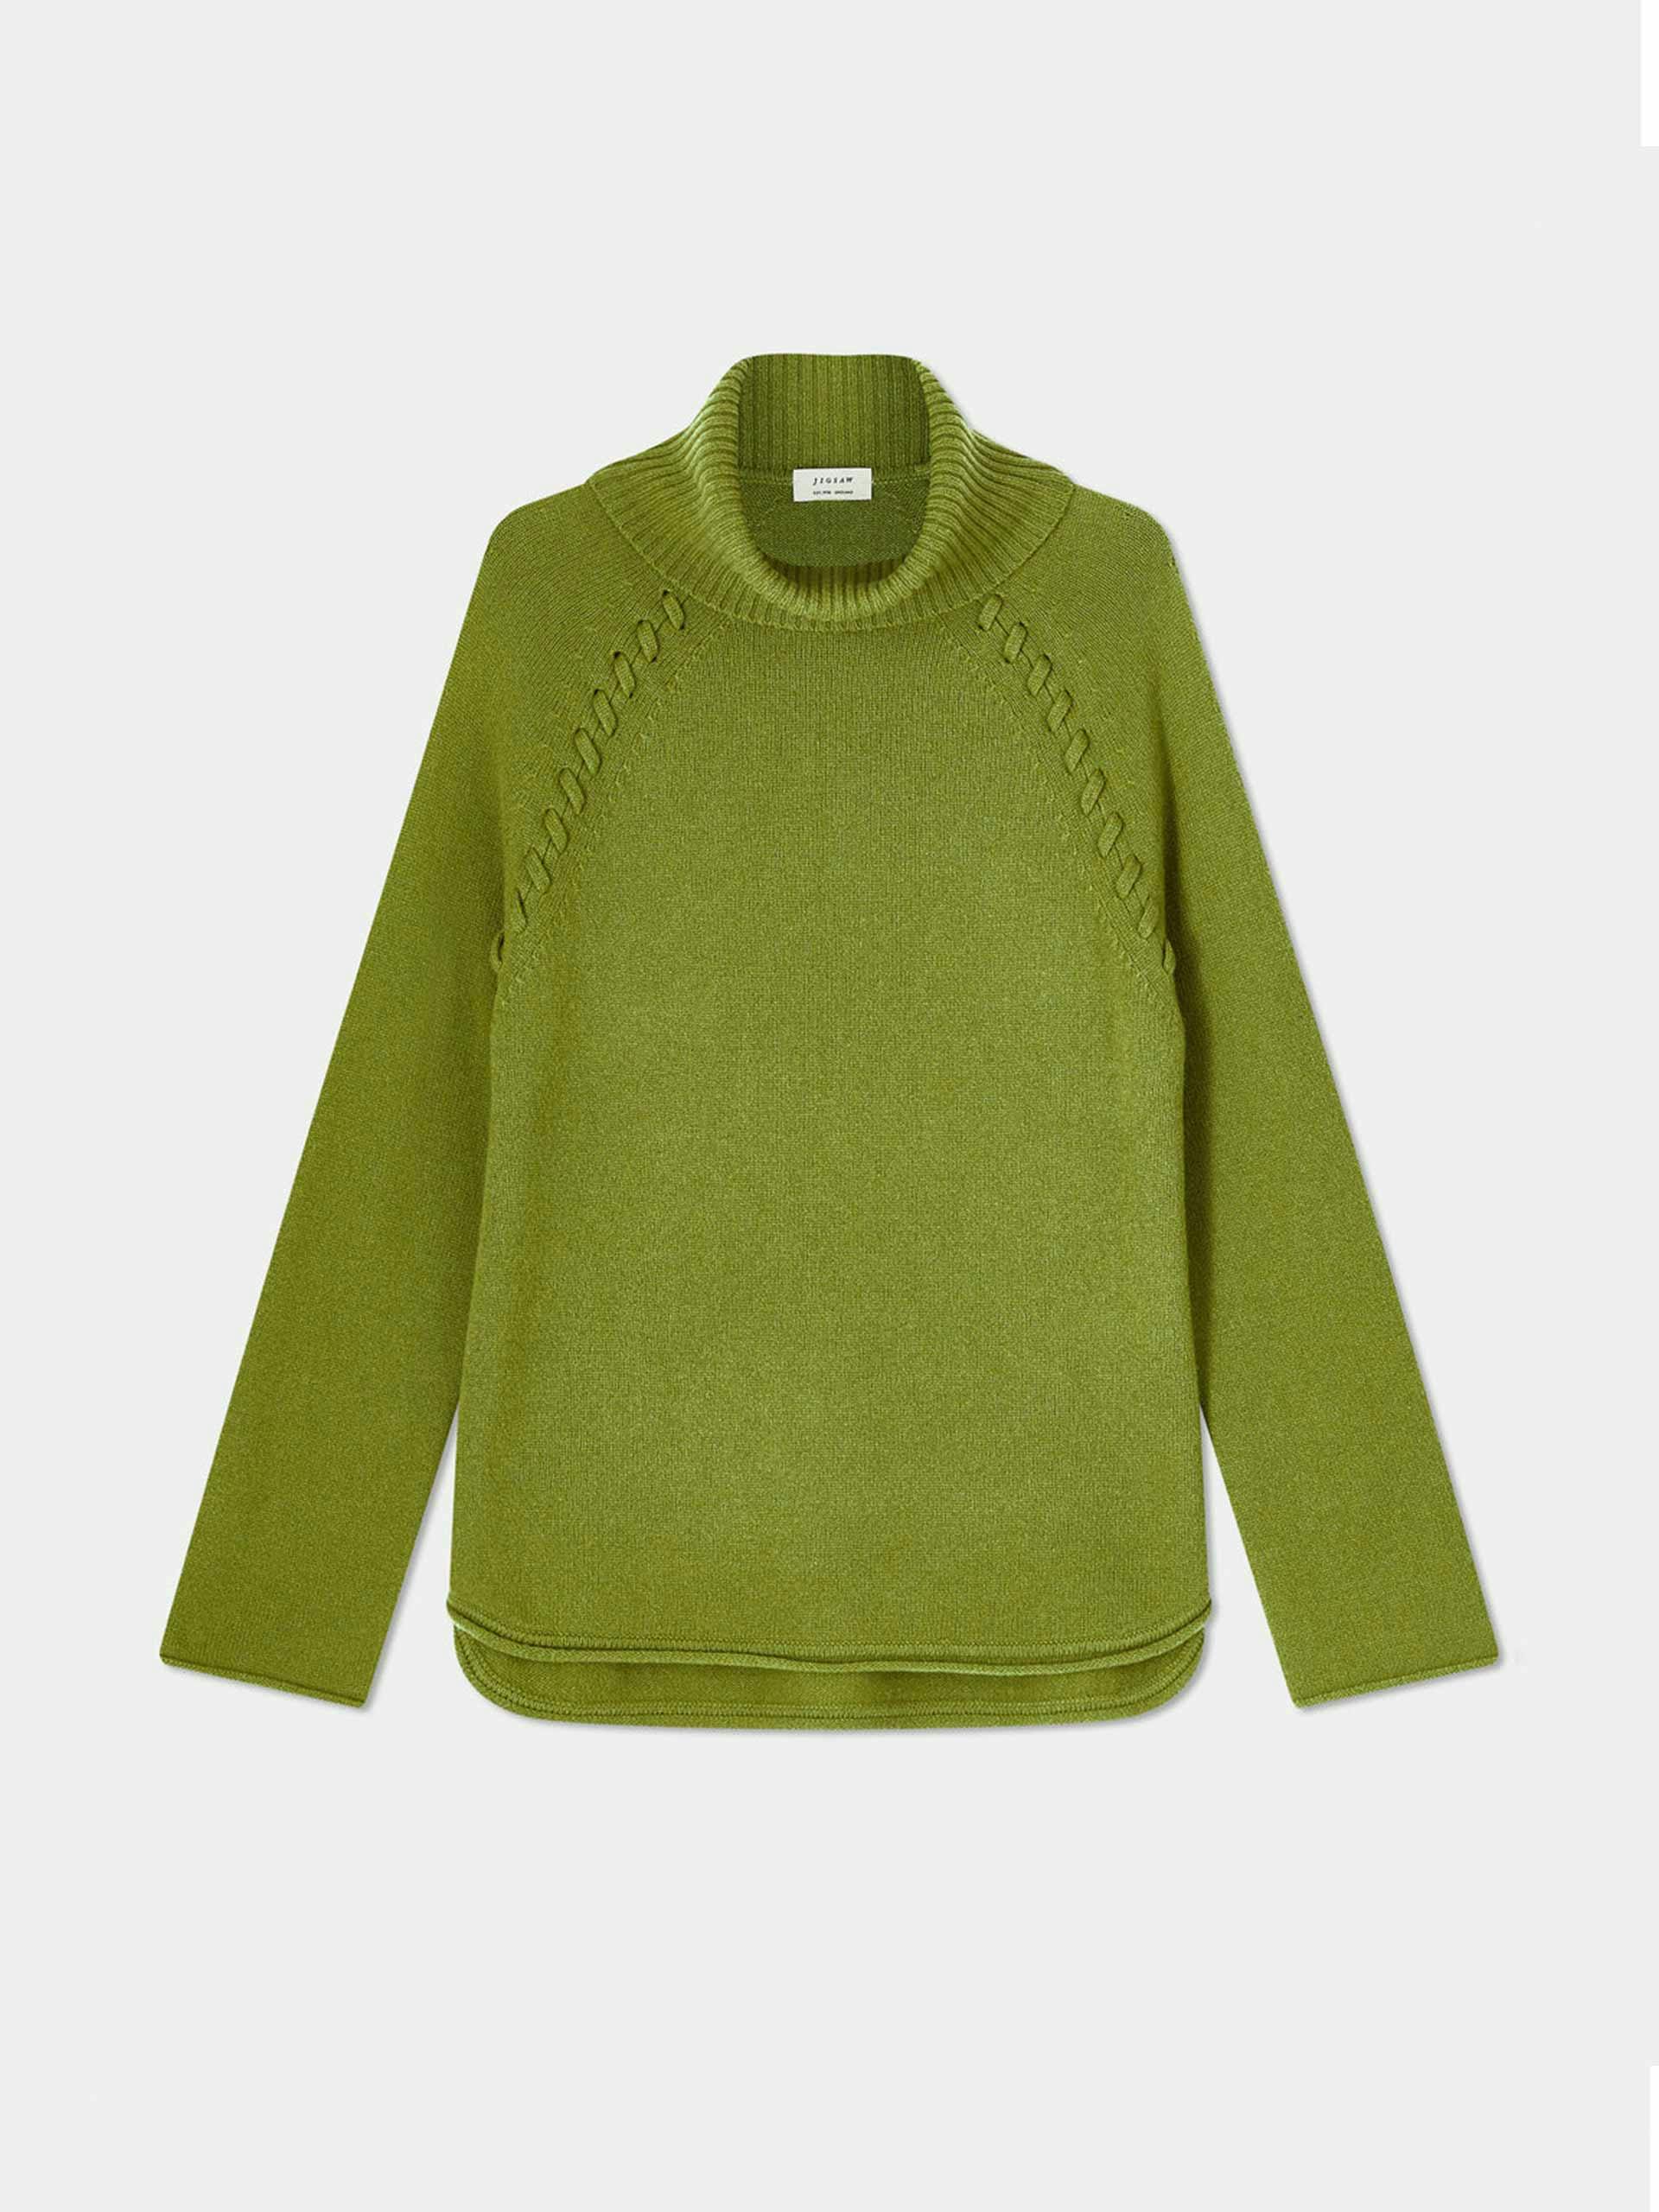 Green merino wool jumper